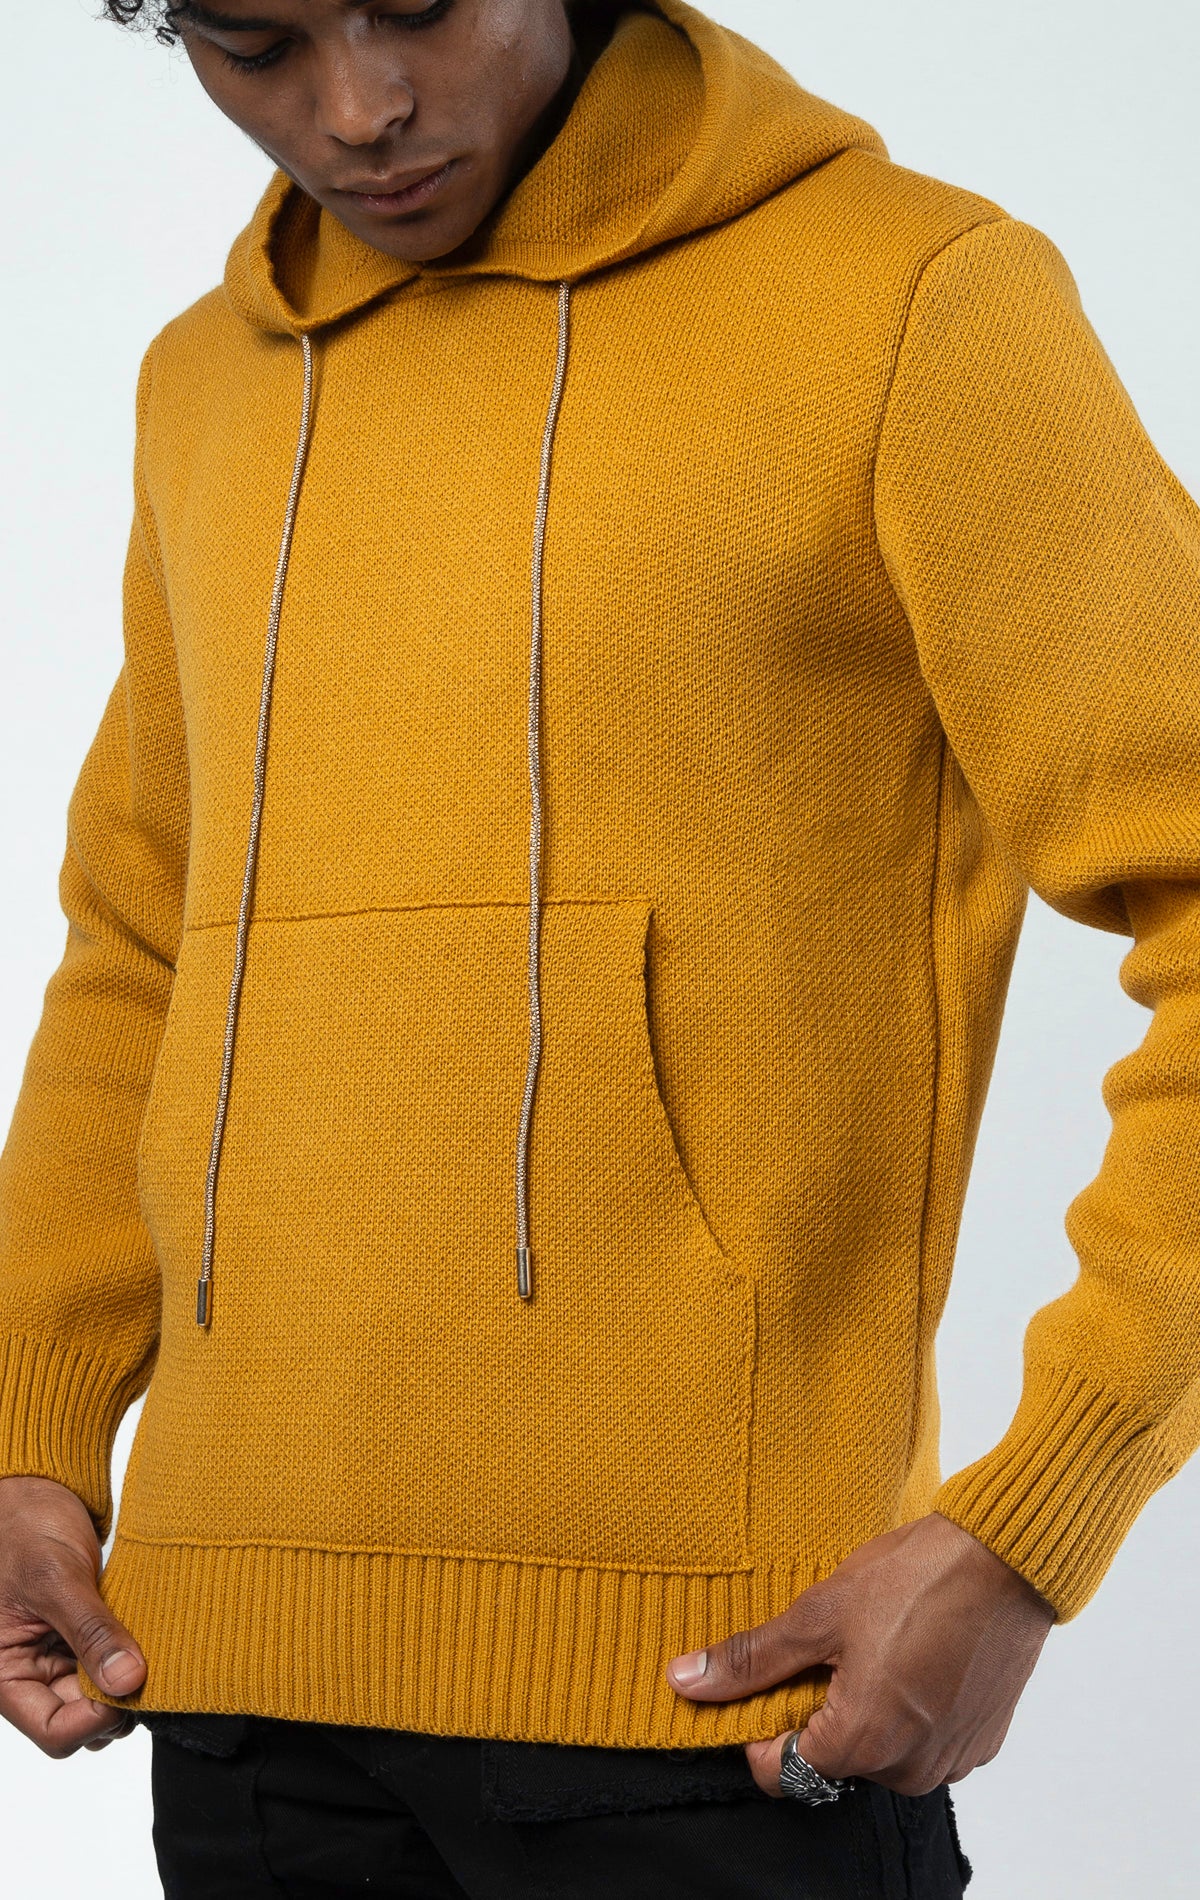 Luxury wheat sweater hoodie with crystal strings